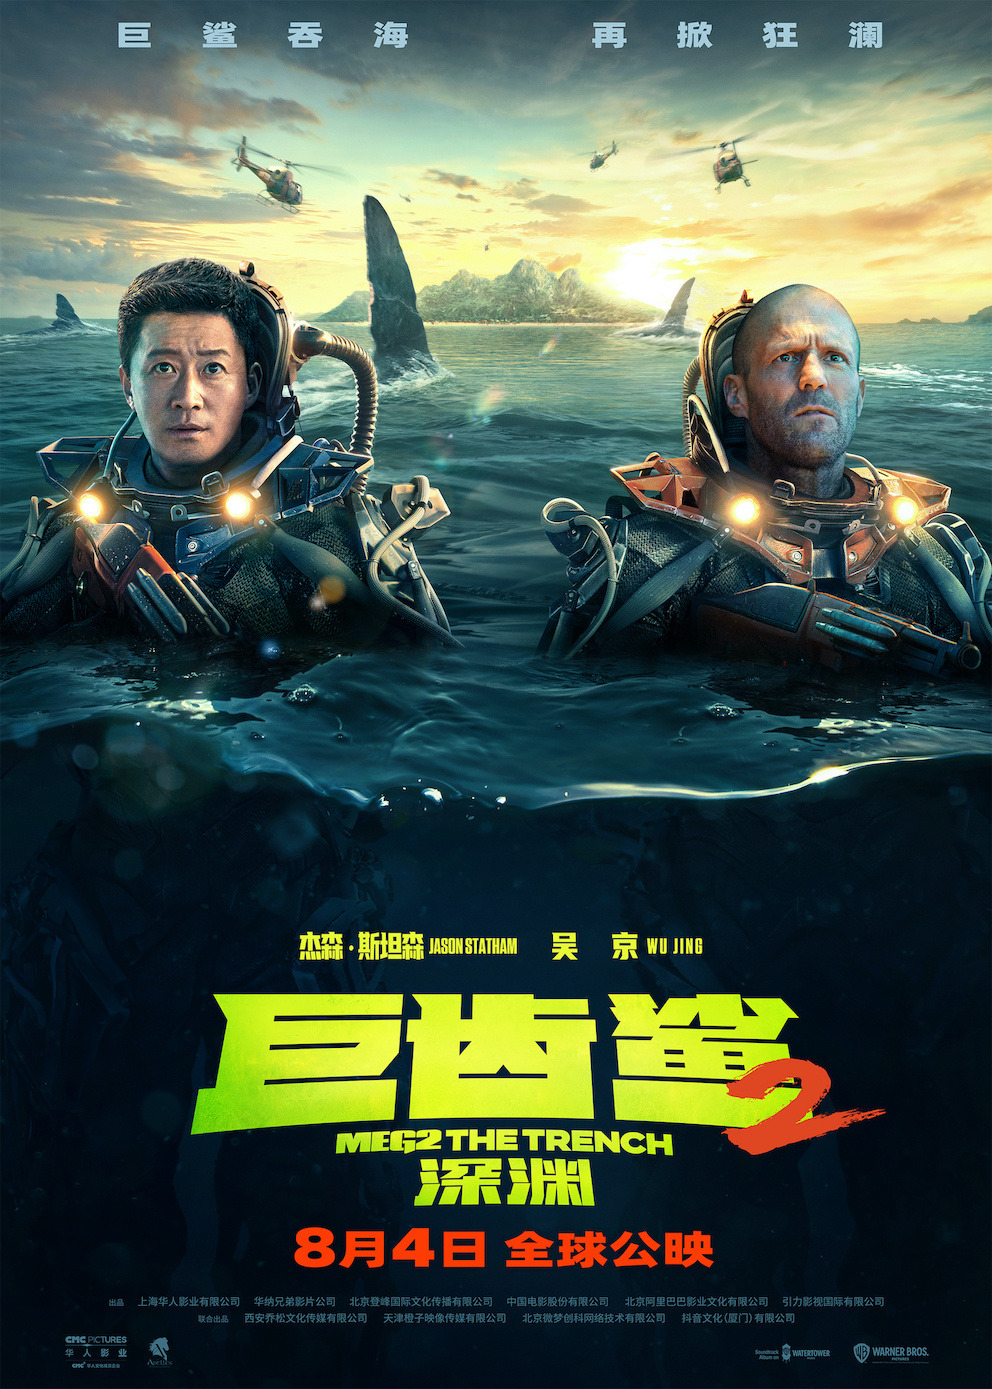 Meg 2 The Trench (7 of 23) Extra Large Movie Poster Image IMP Awards